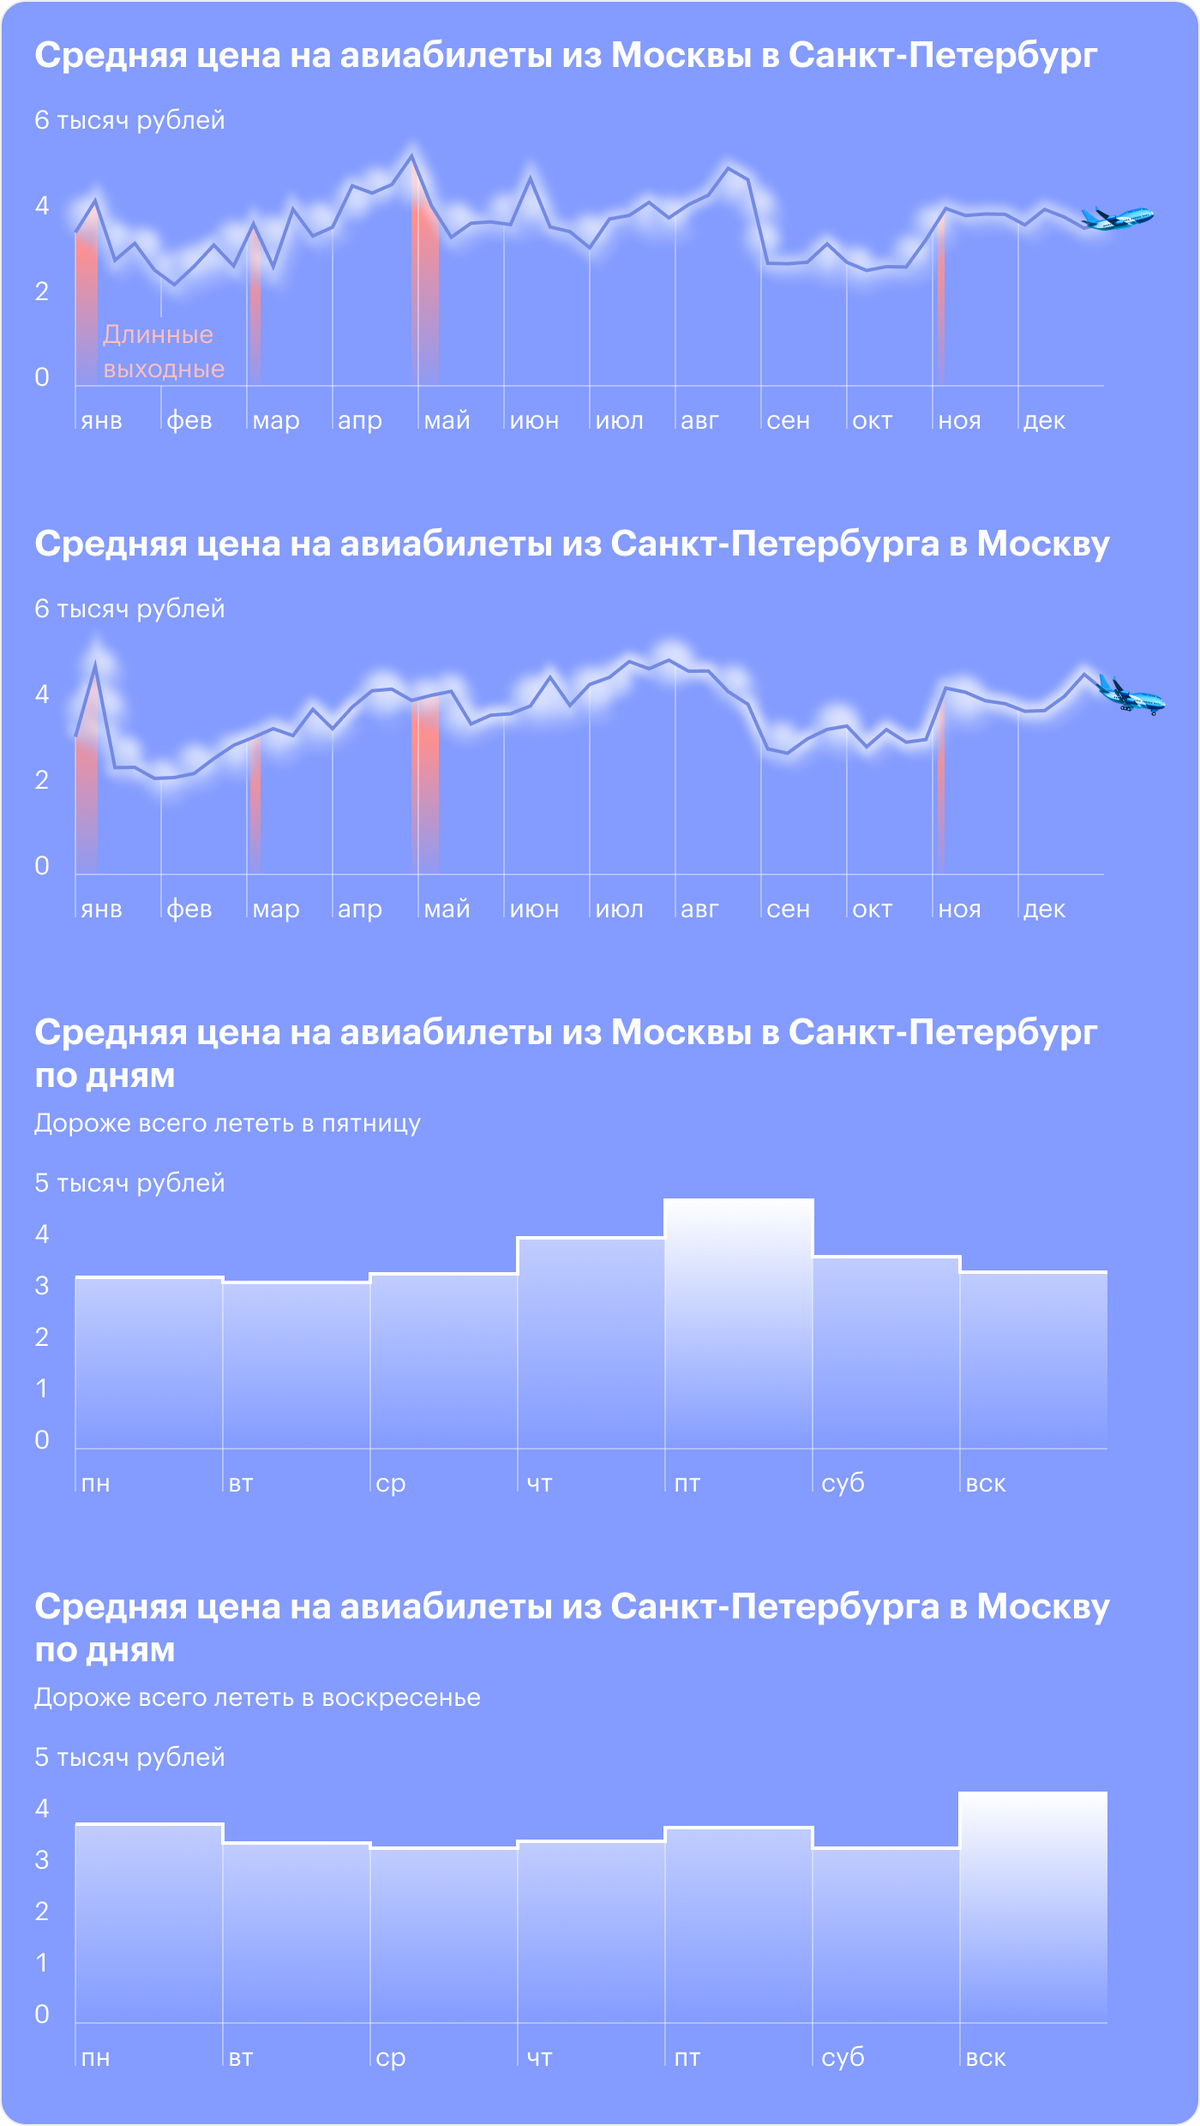 Динамика цен на авиабилеты по маршруту Москва — Санкт-Петербург и обратно. Источник: Tinkoff Data, расчеты Т—Ж